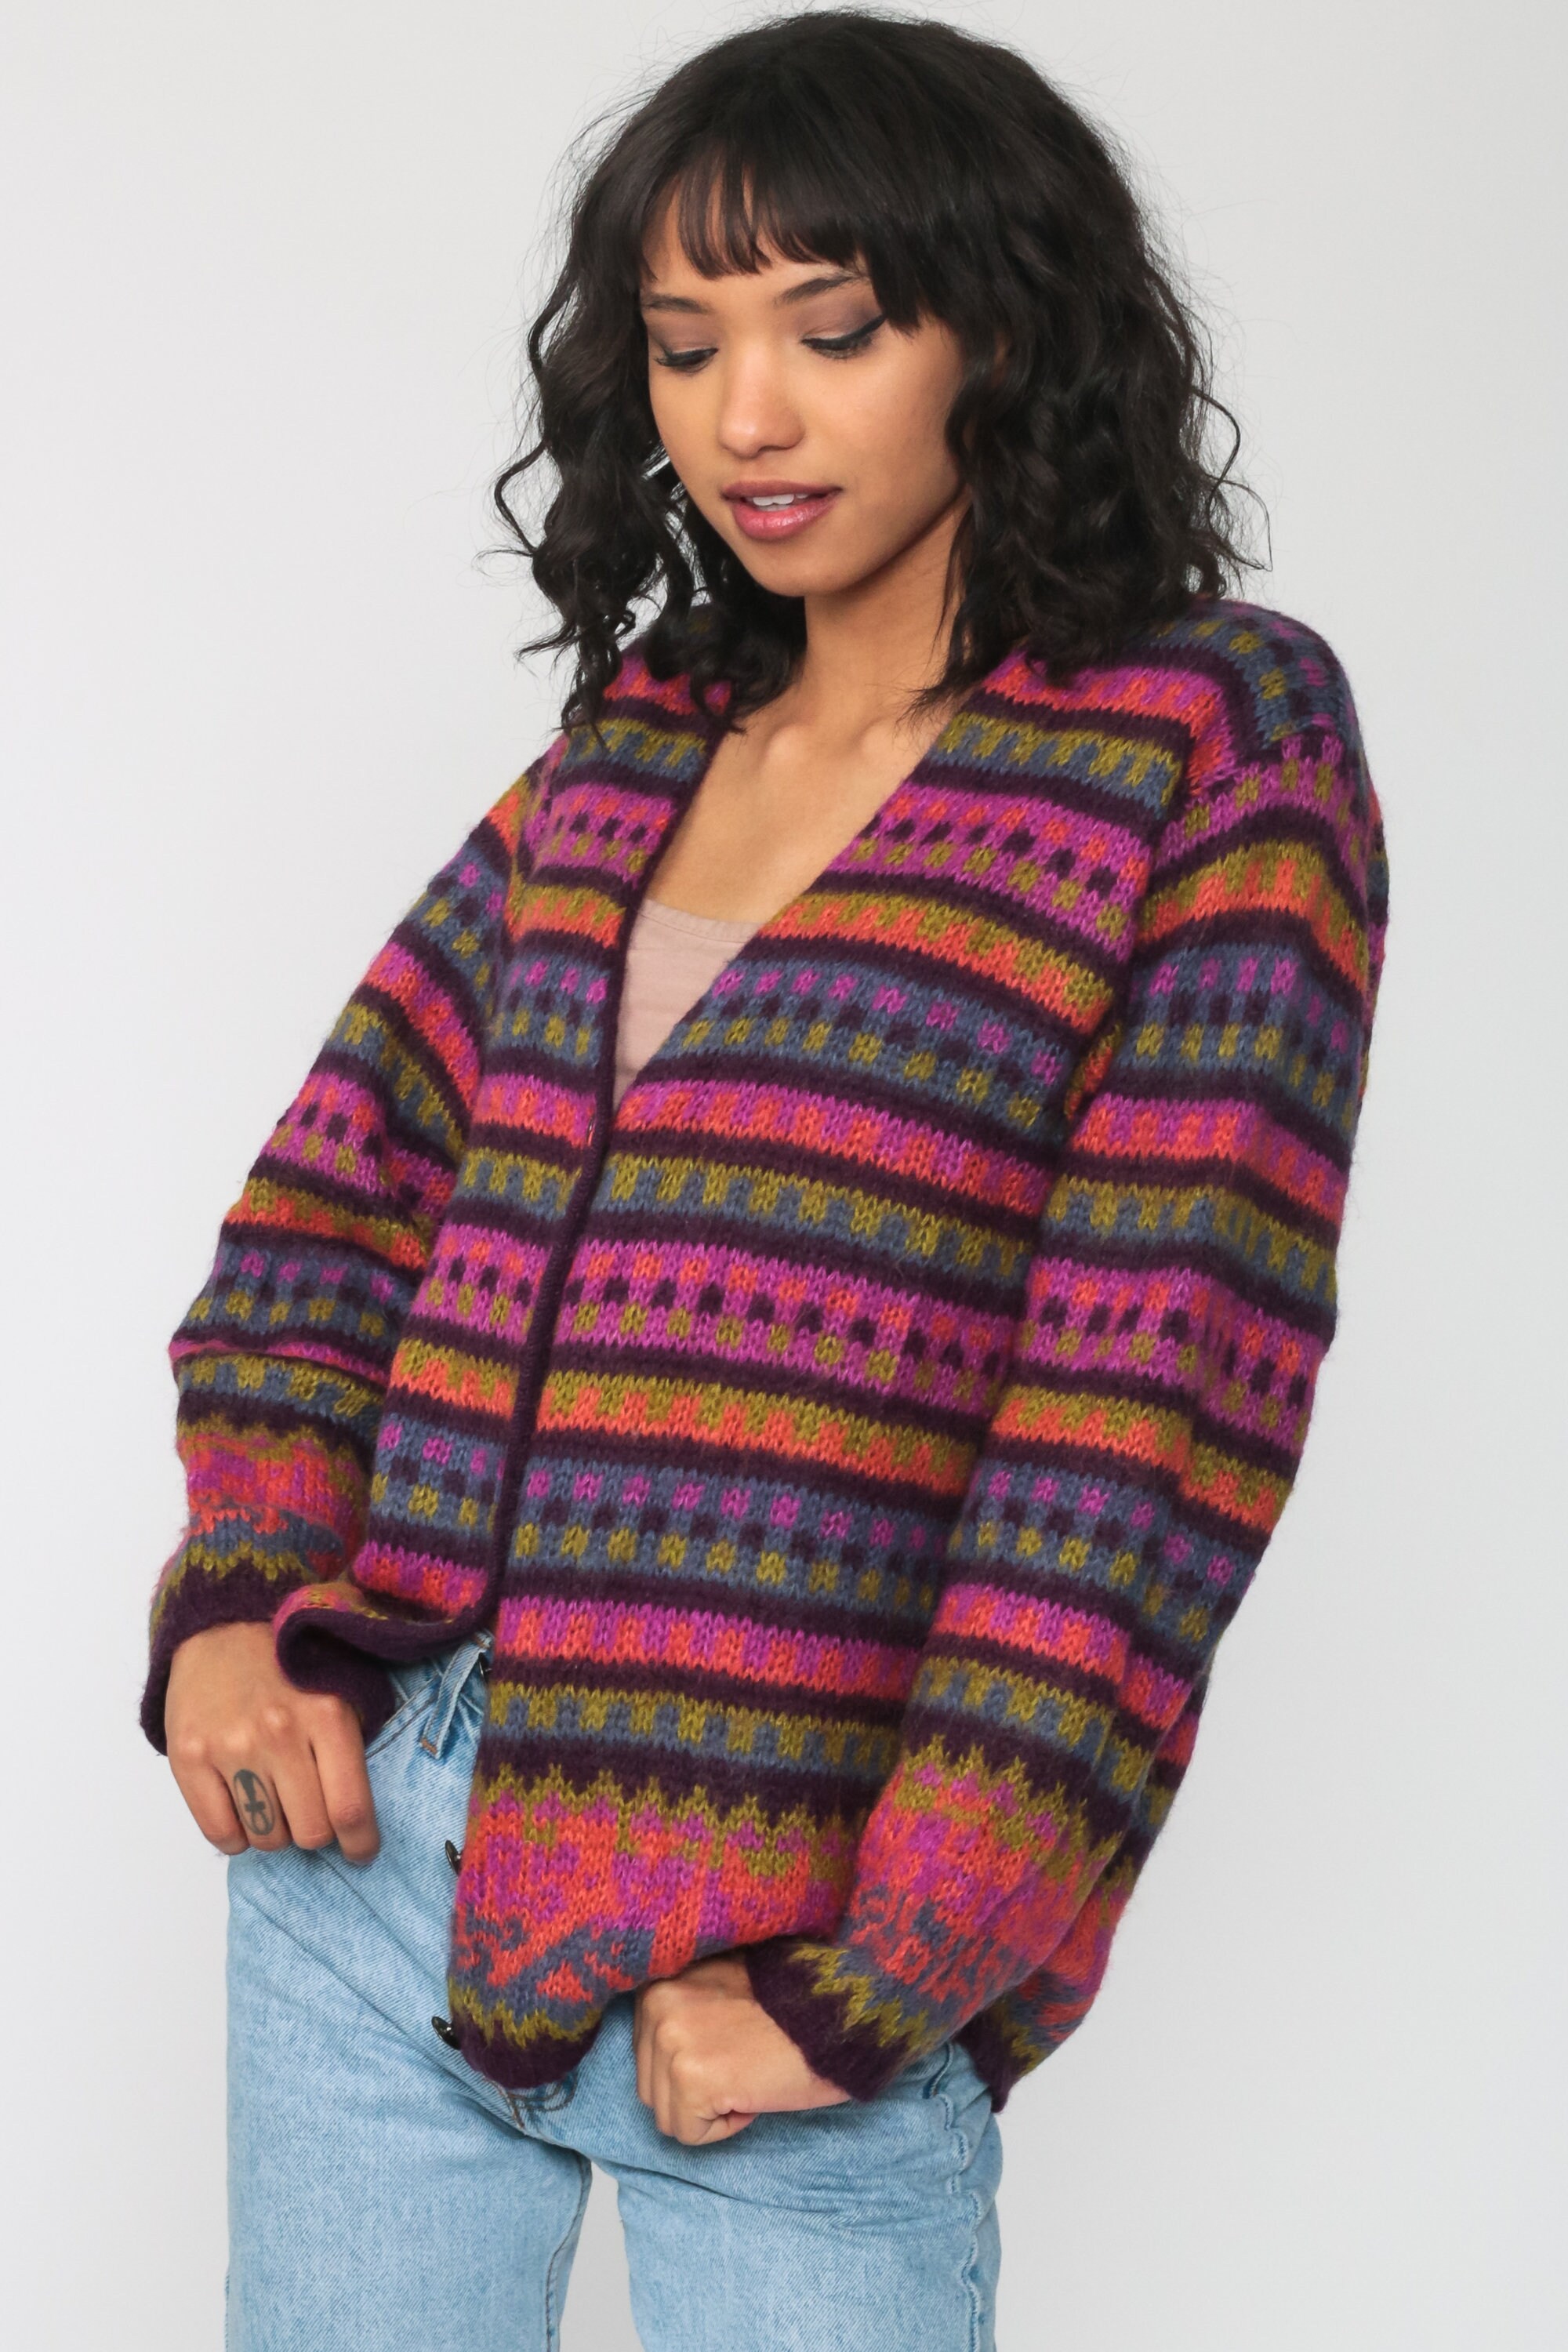 Mohair Sweater FOX PRINT Sweater 80s Grandma Cardigan Animal Striped ...